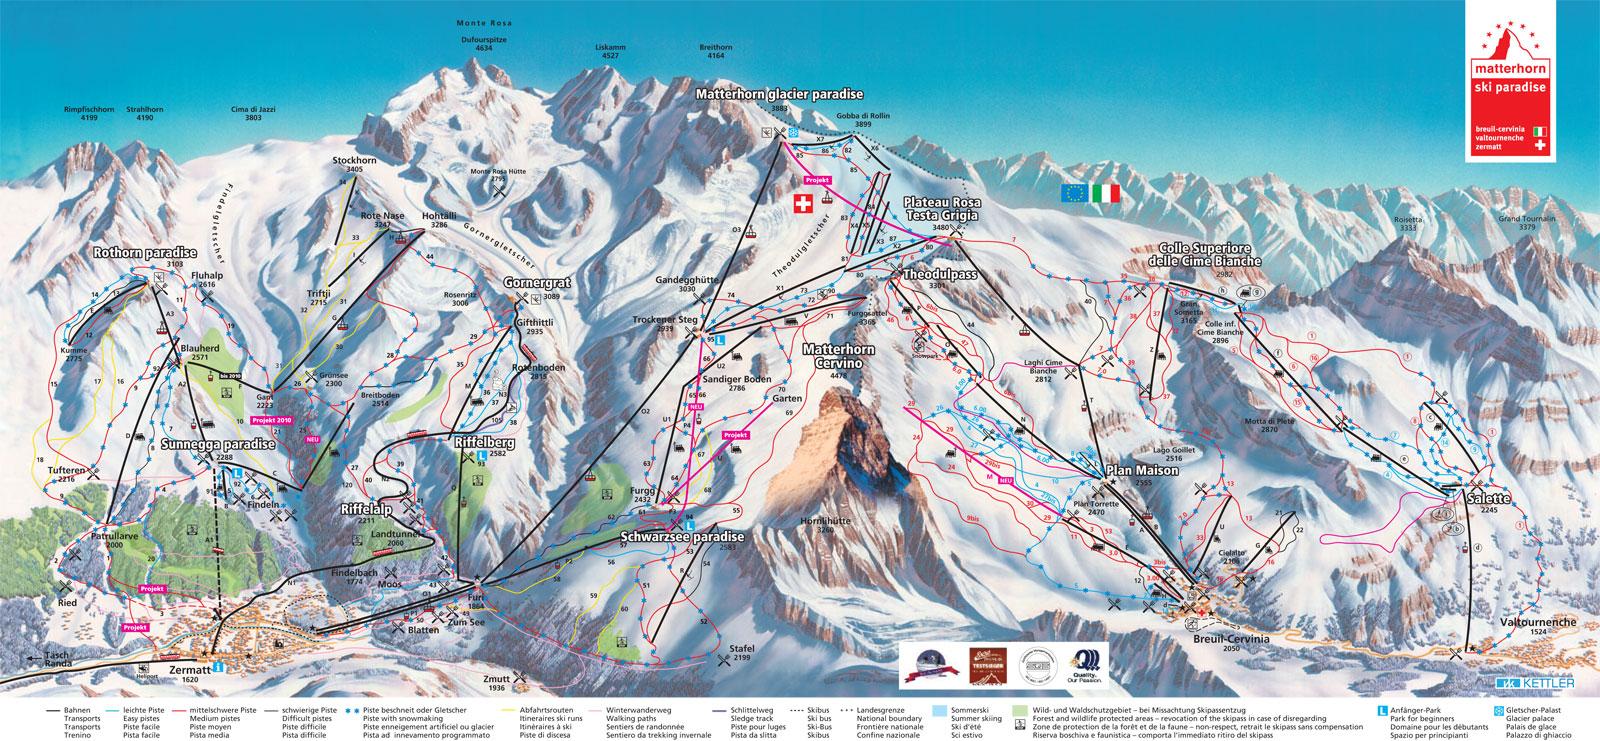 Piste Maps For Swiss Ski Resorts J2ski regarding how to ski in switzerland pertaining to Aspiration